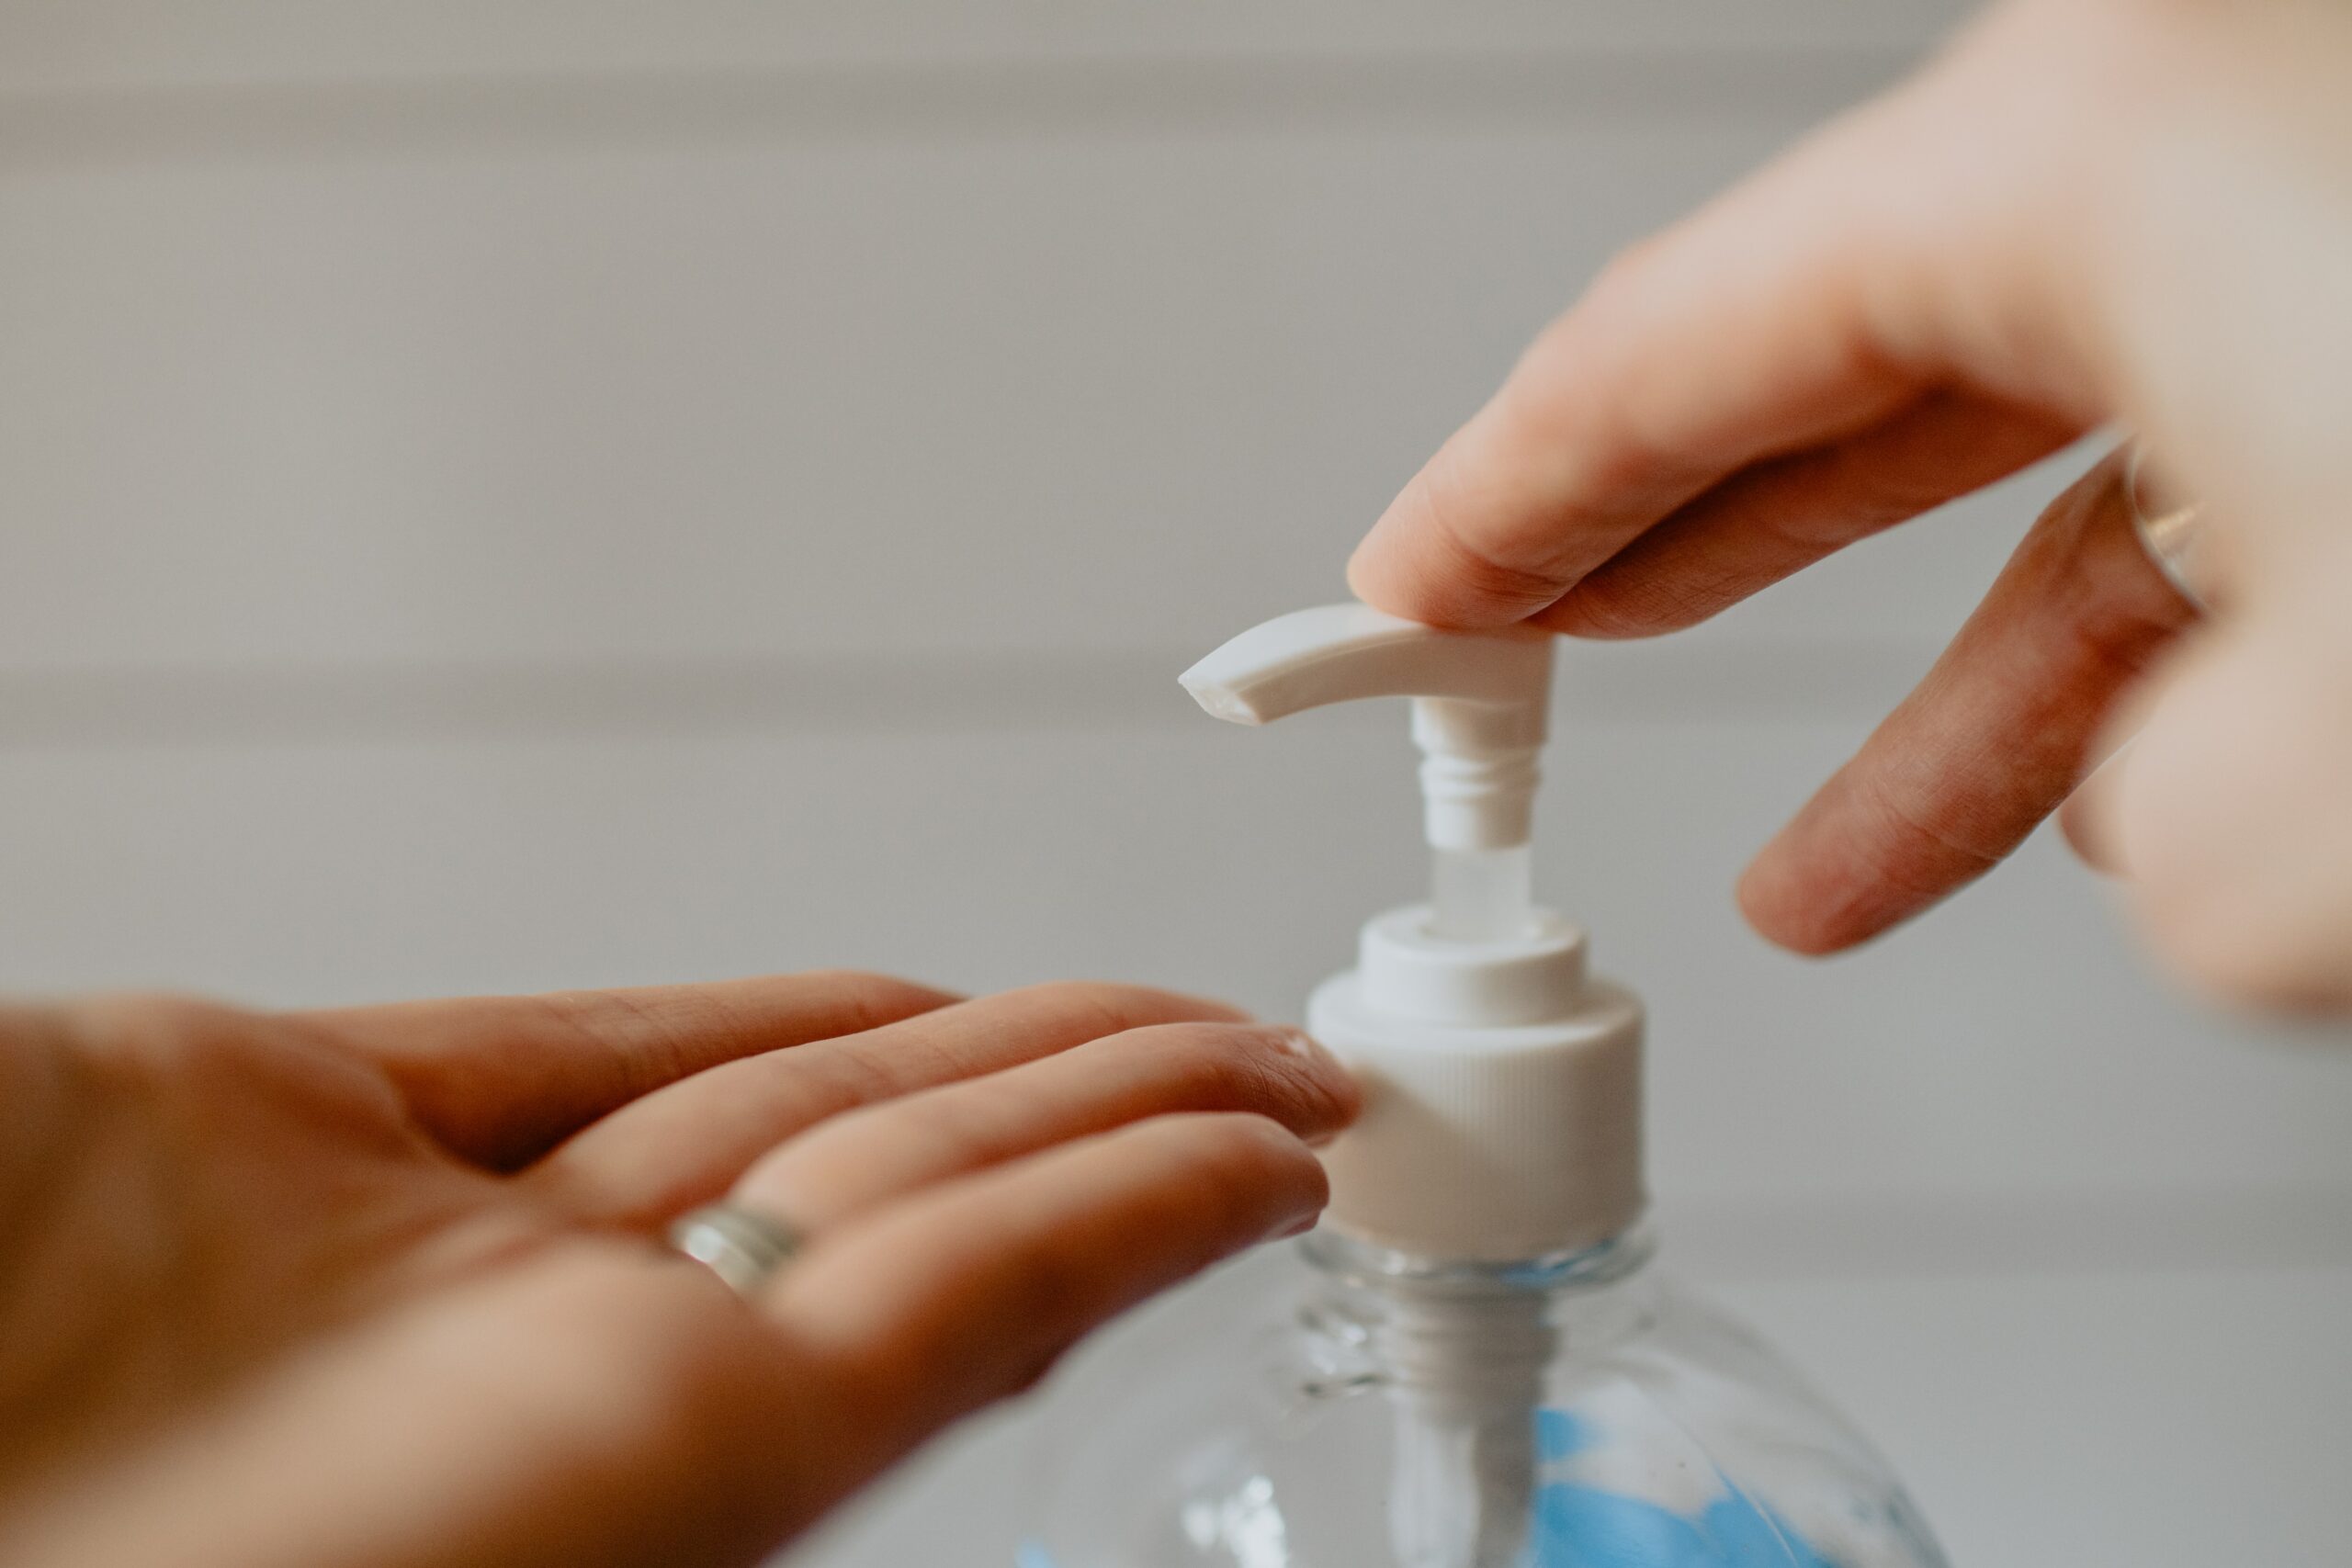 How To Make Diy Hand Sanitizer